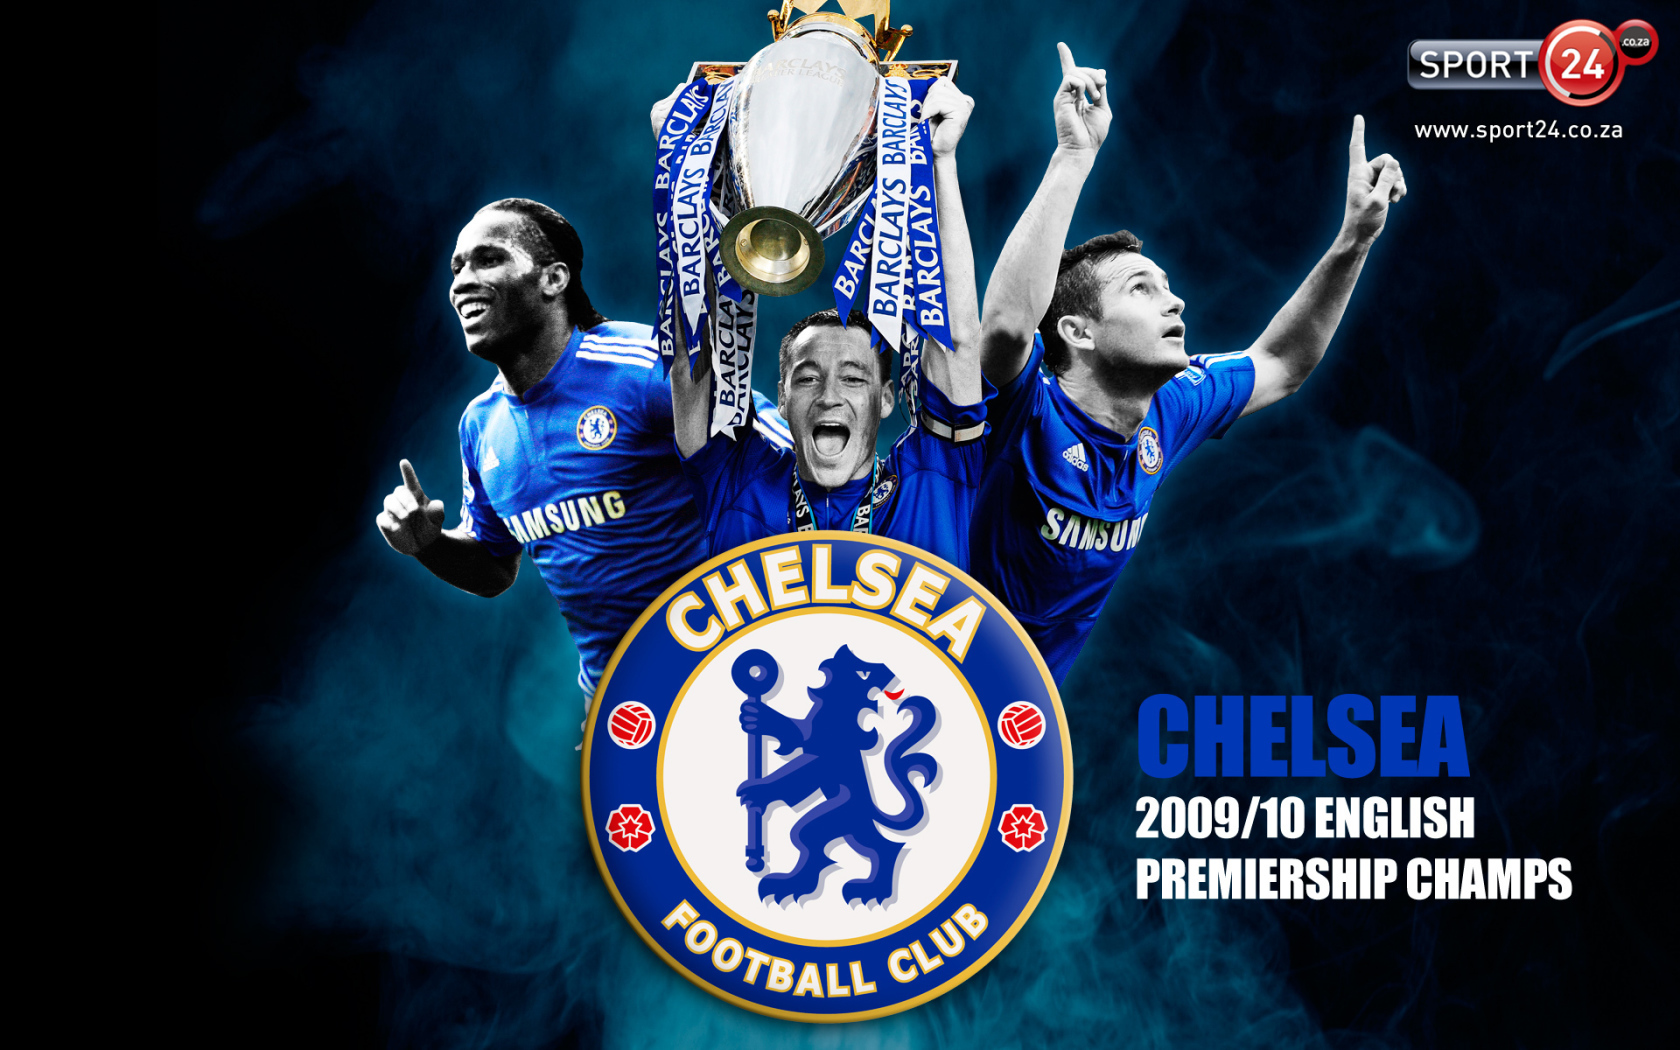 Football club Chelsea won the trophy